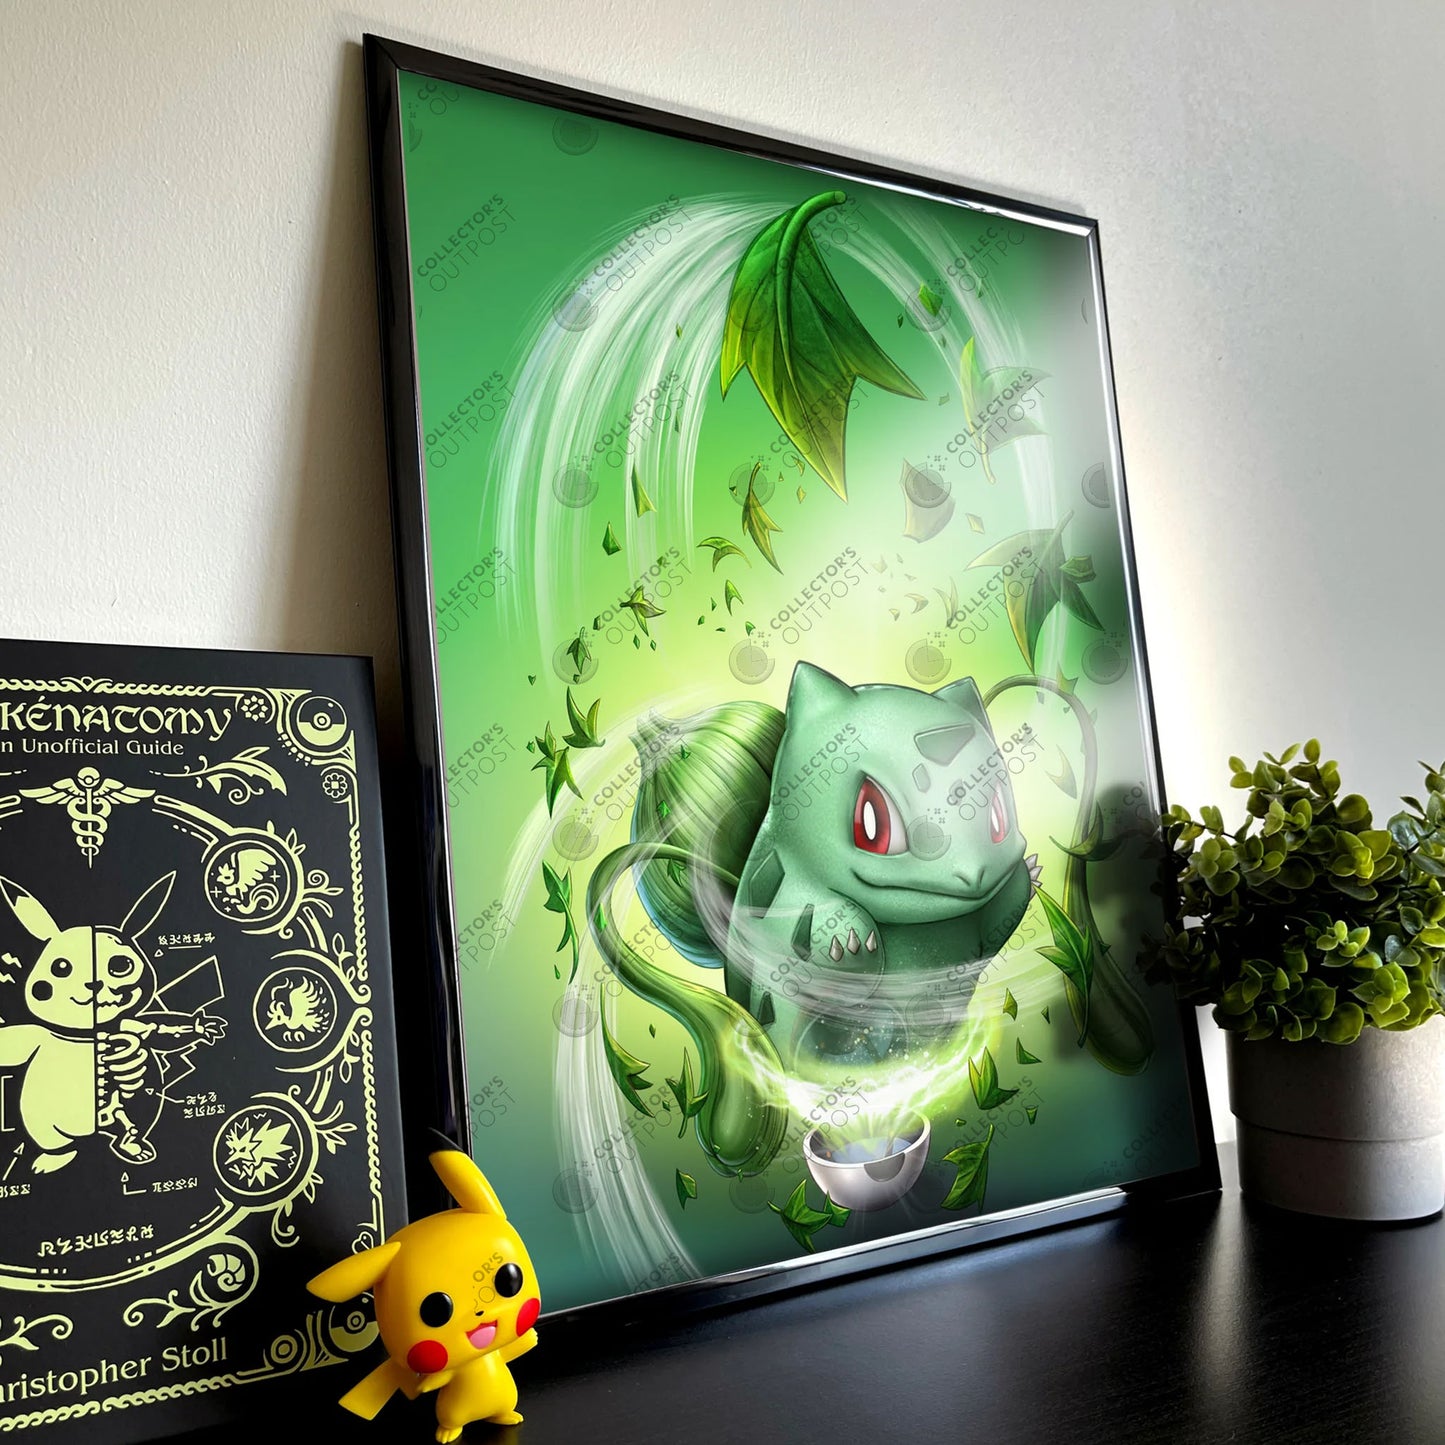 Bulbasaur #001 (Pokemon) Premium Art Print